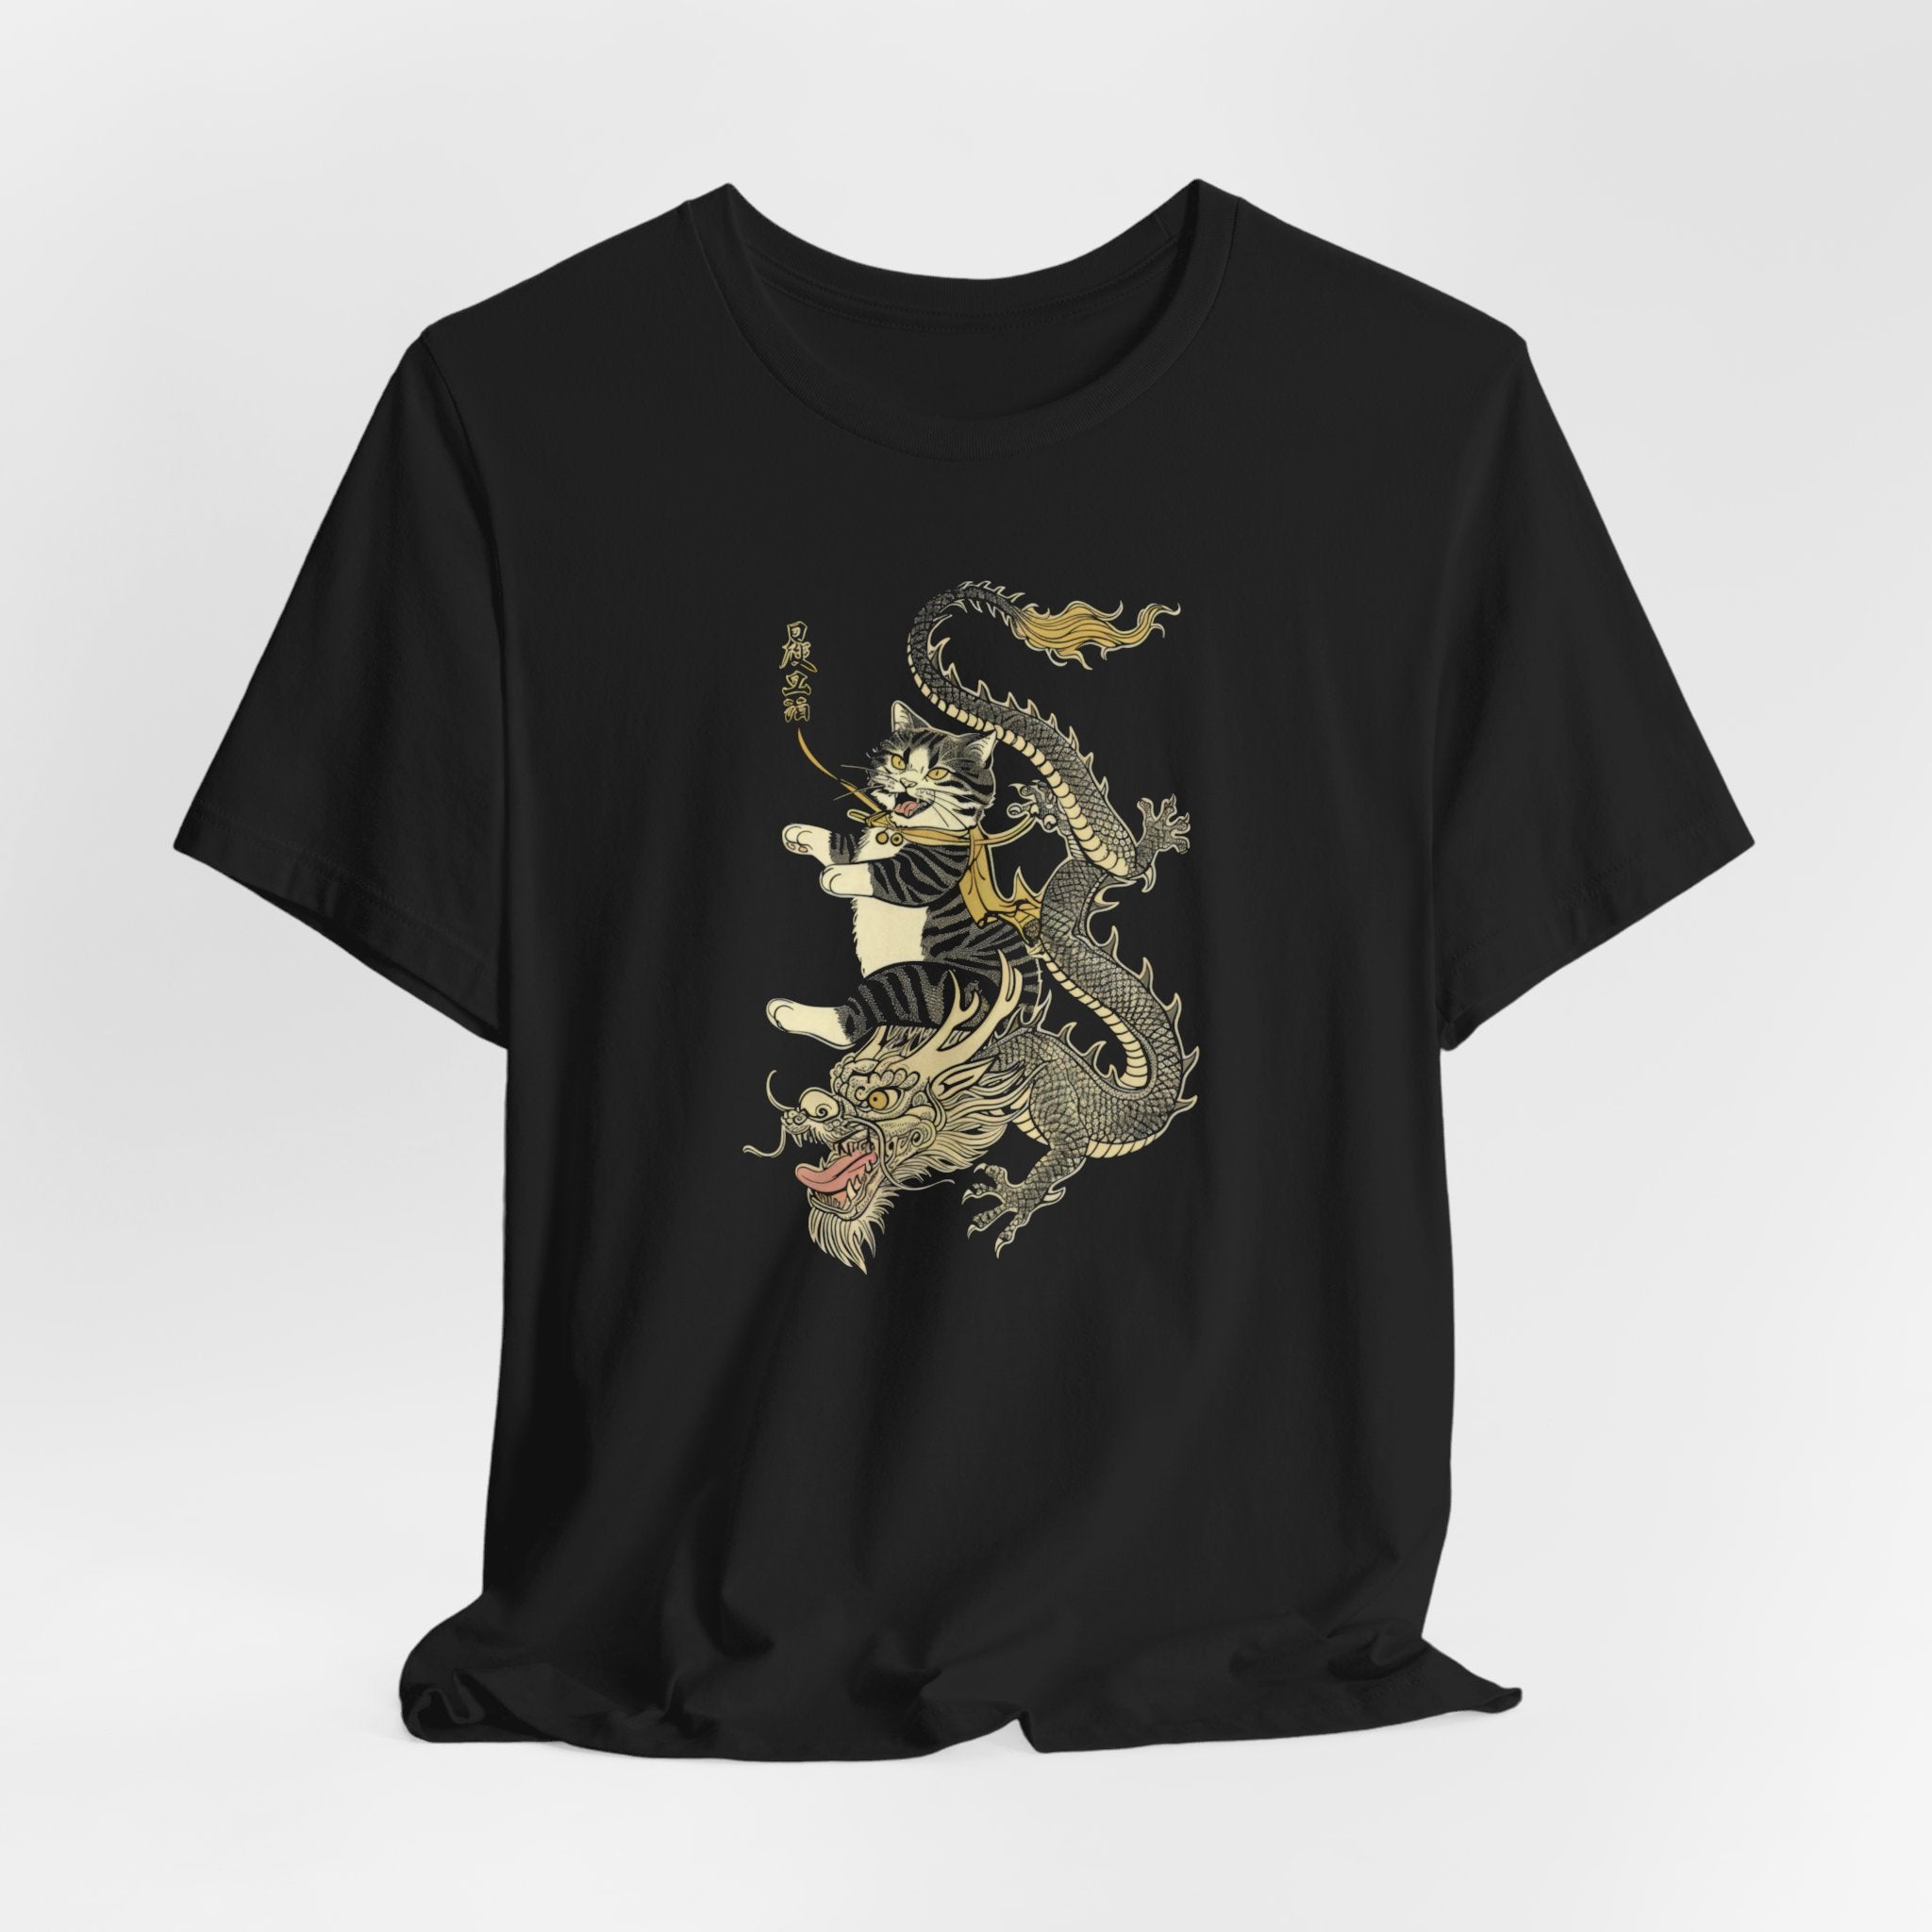 Cat Riding Dragon Mythical T-Shirt